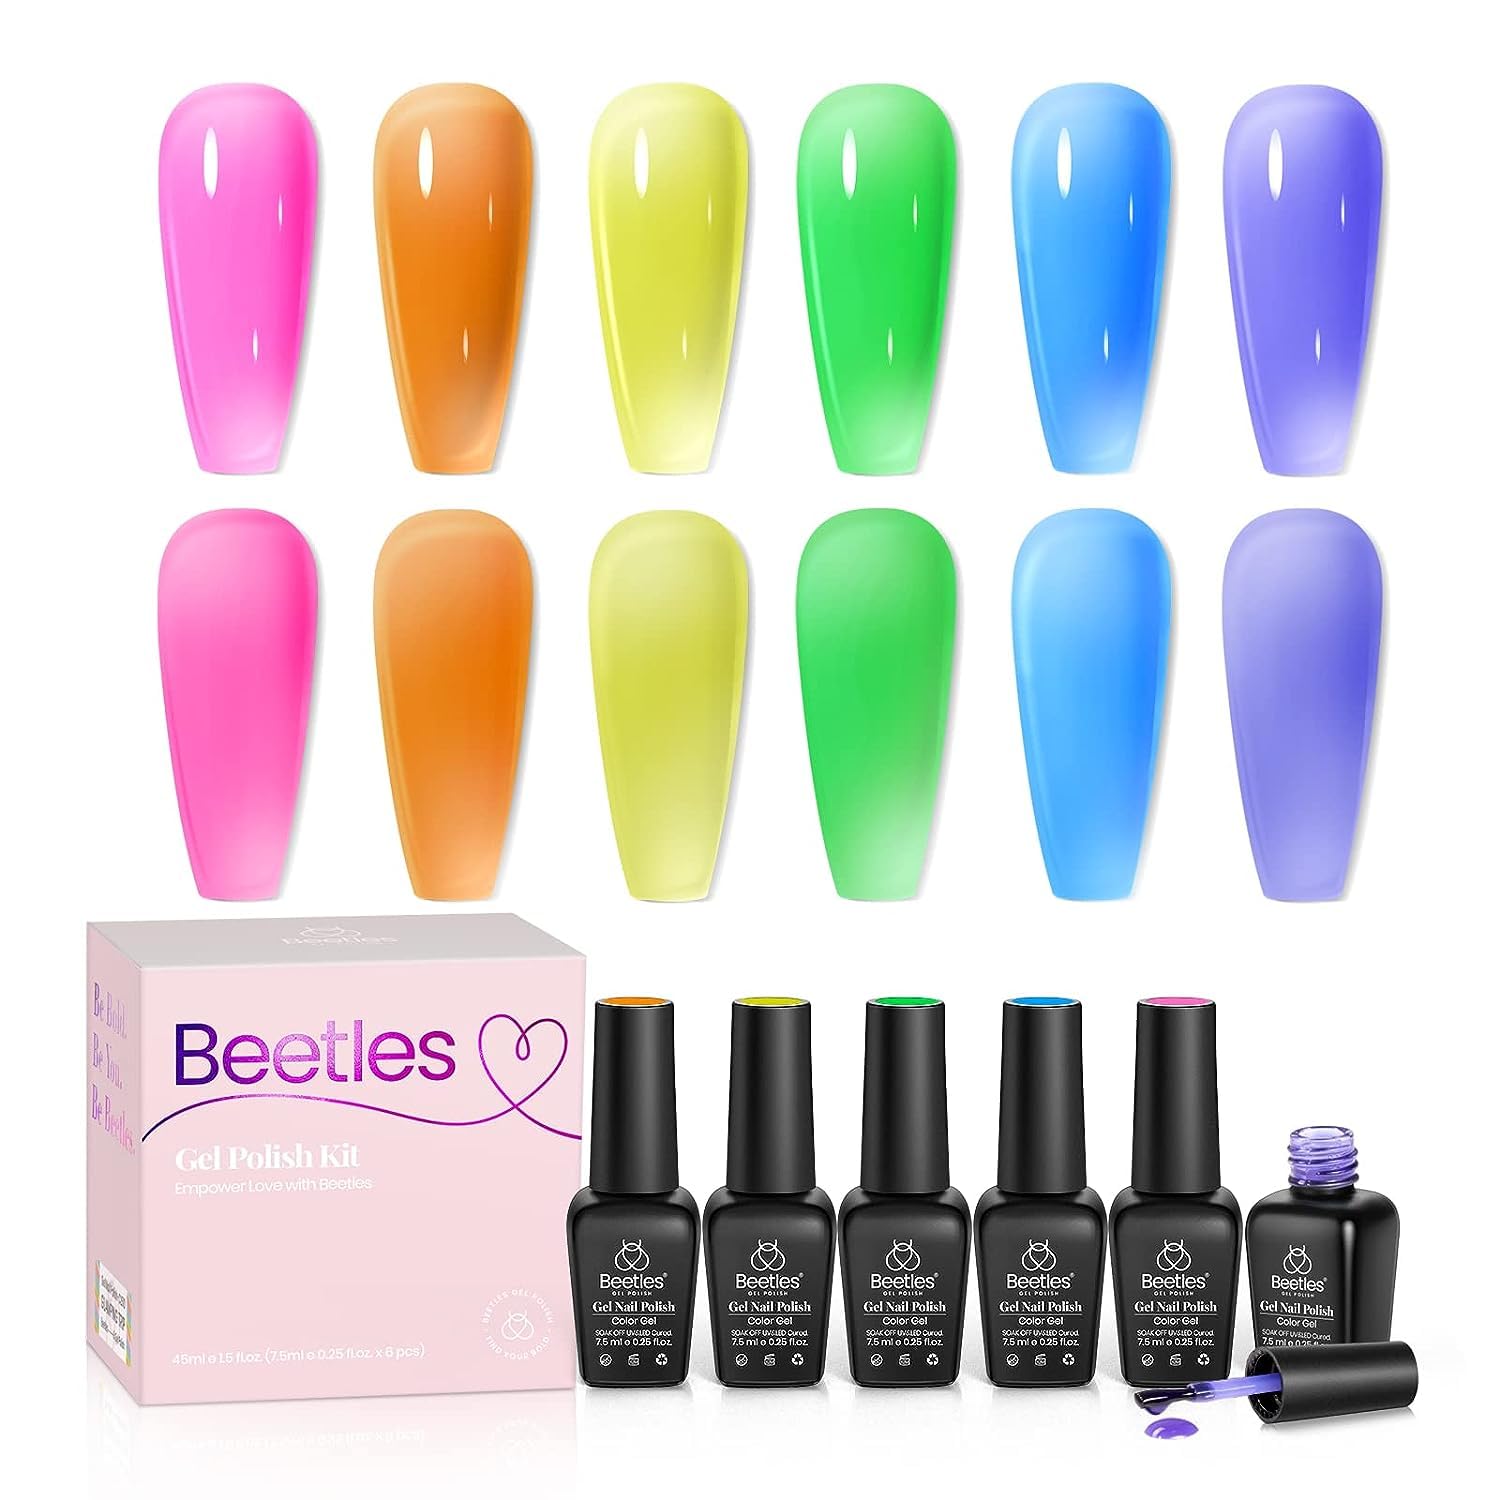 VERY GOOD gel nail polish Korean 60 colors set – ZOELLA BEAUTY